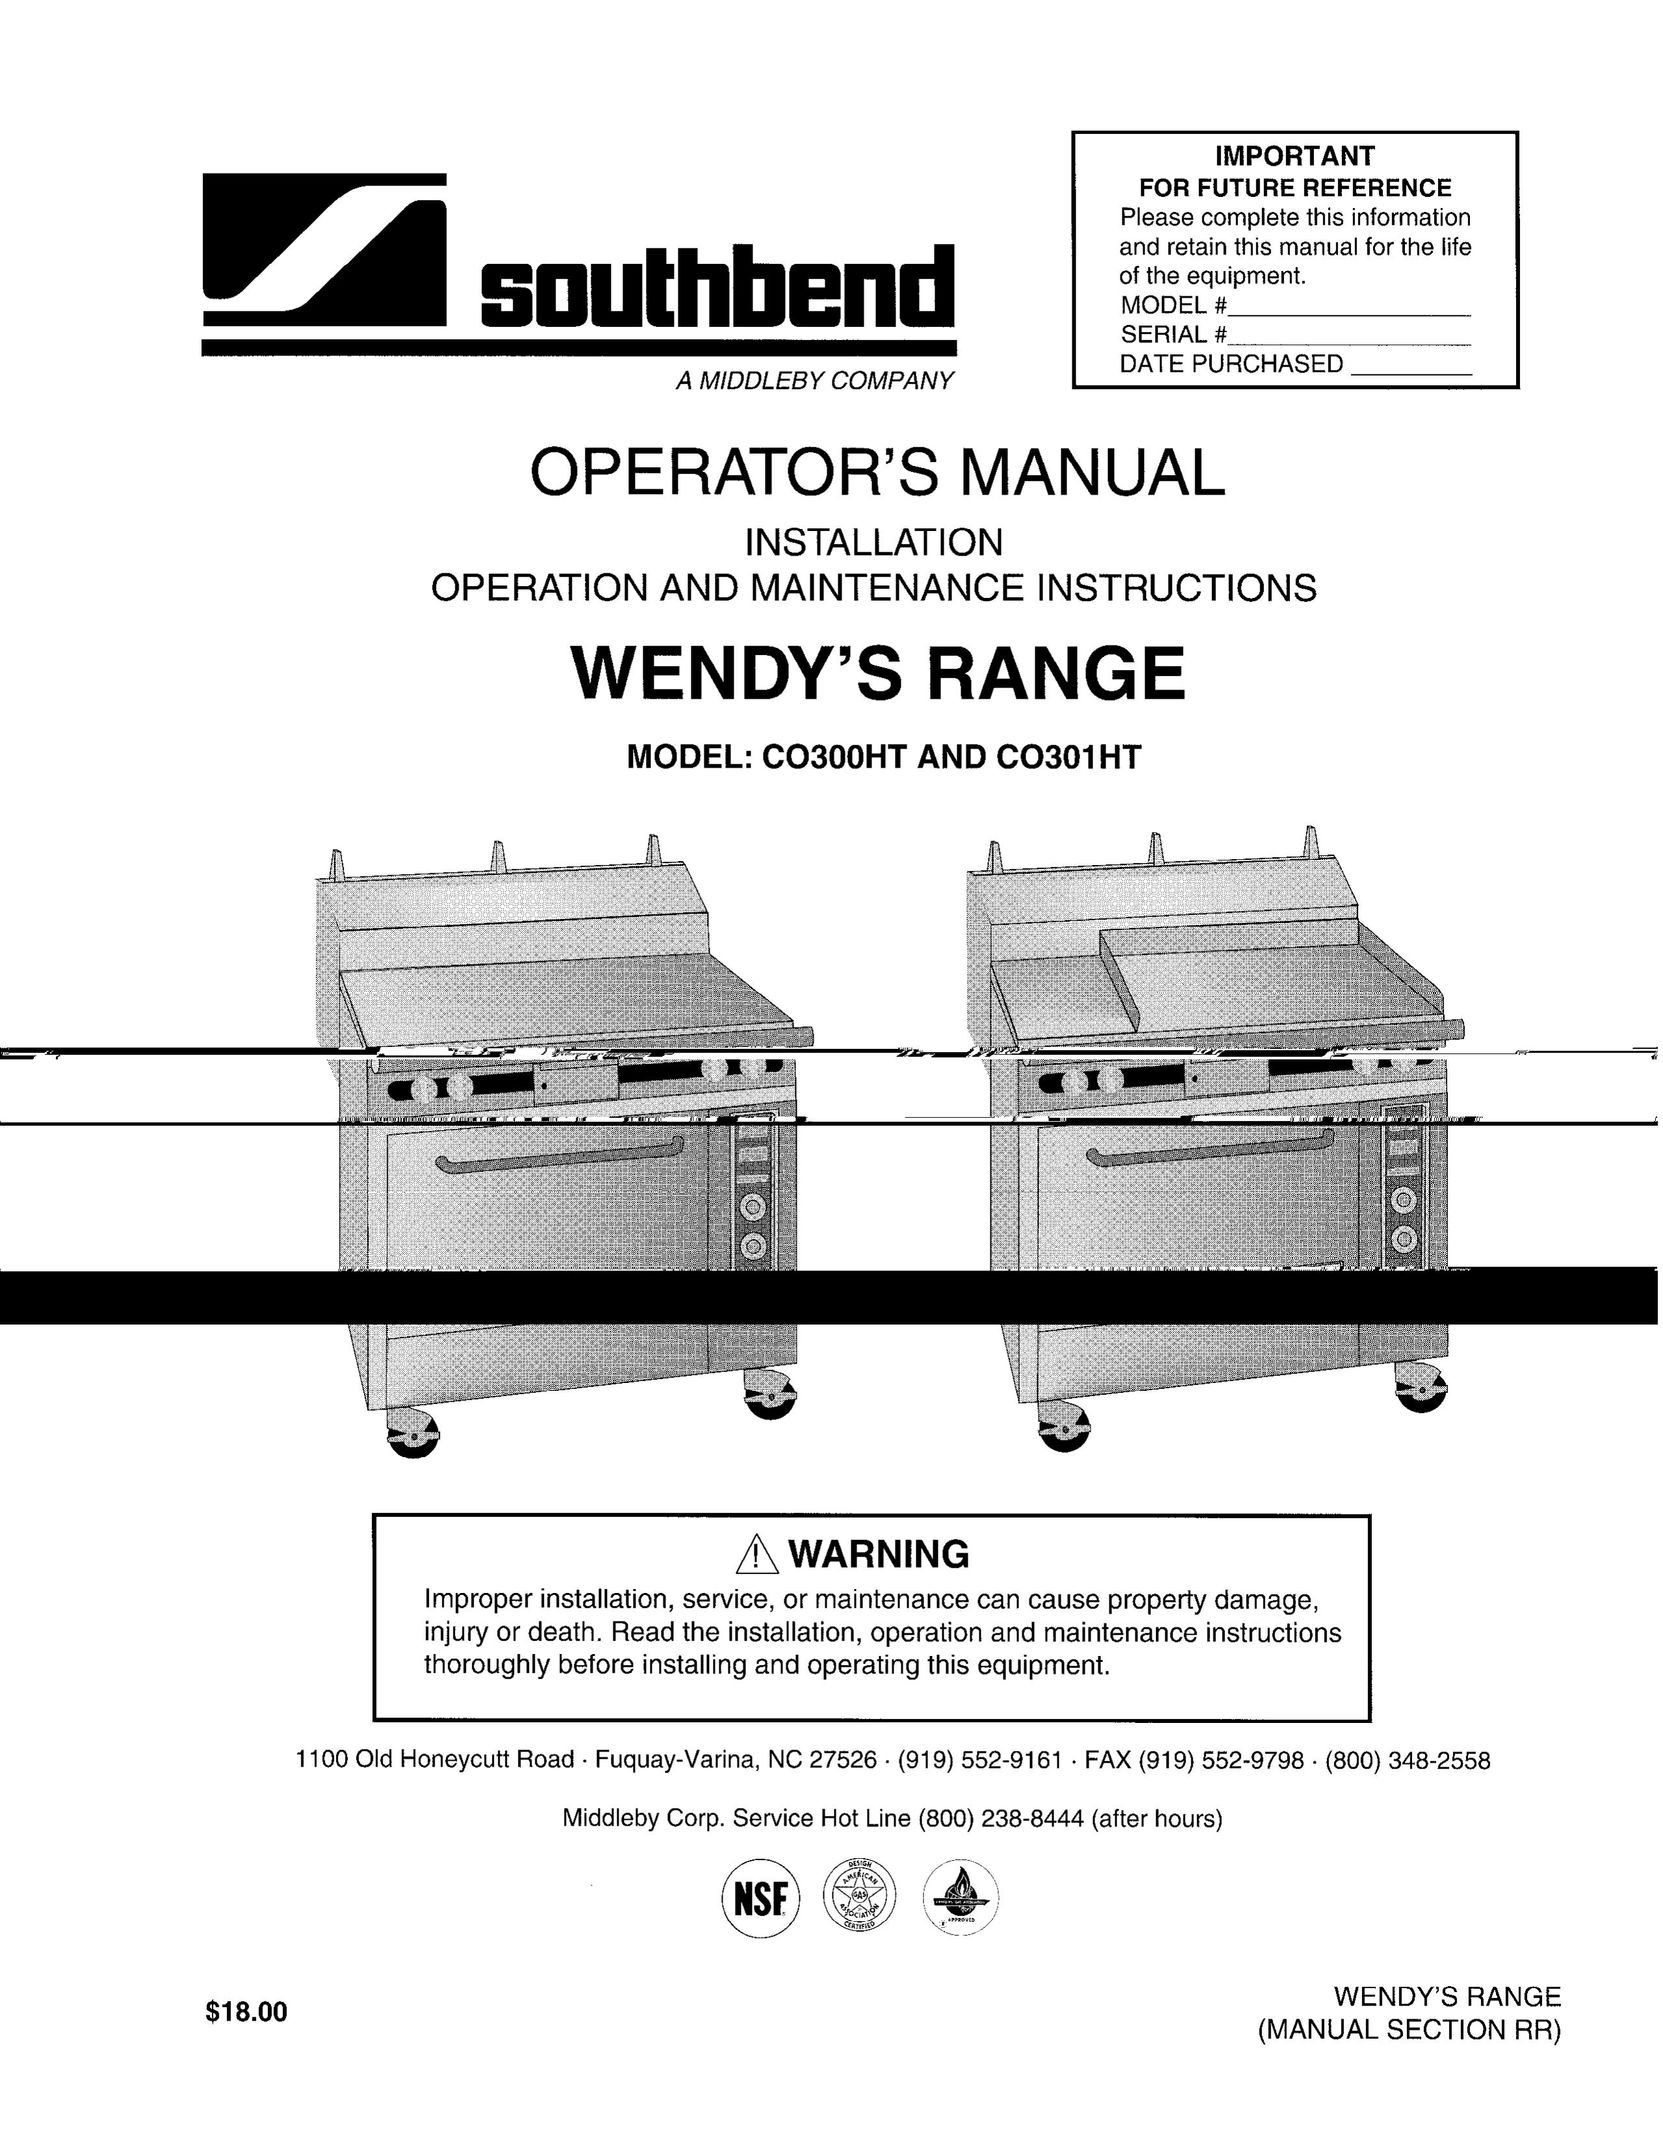 Southbend CO301HT Range User Manual